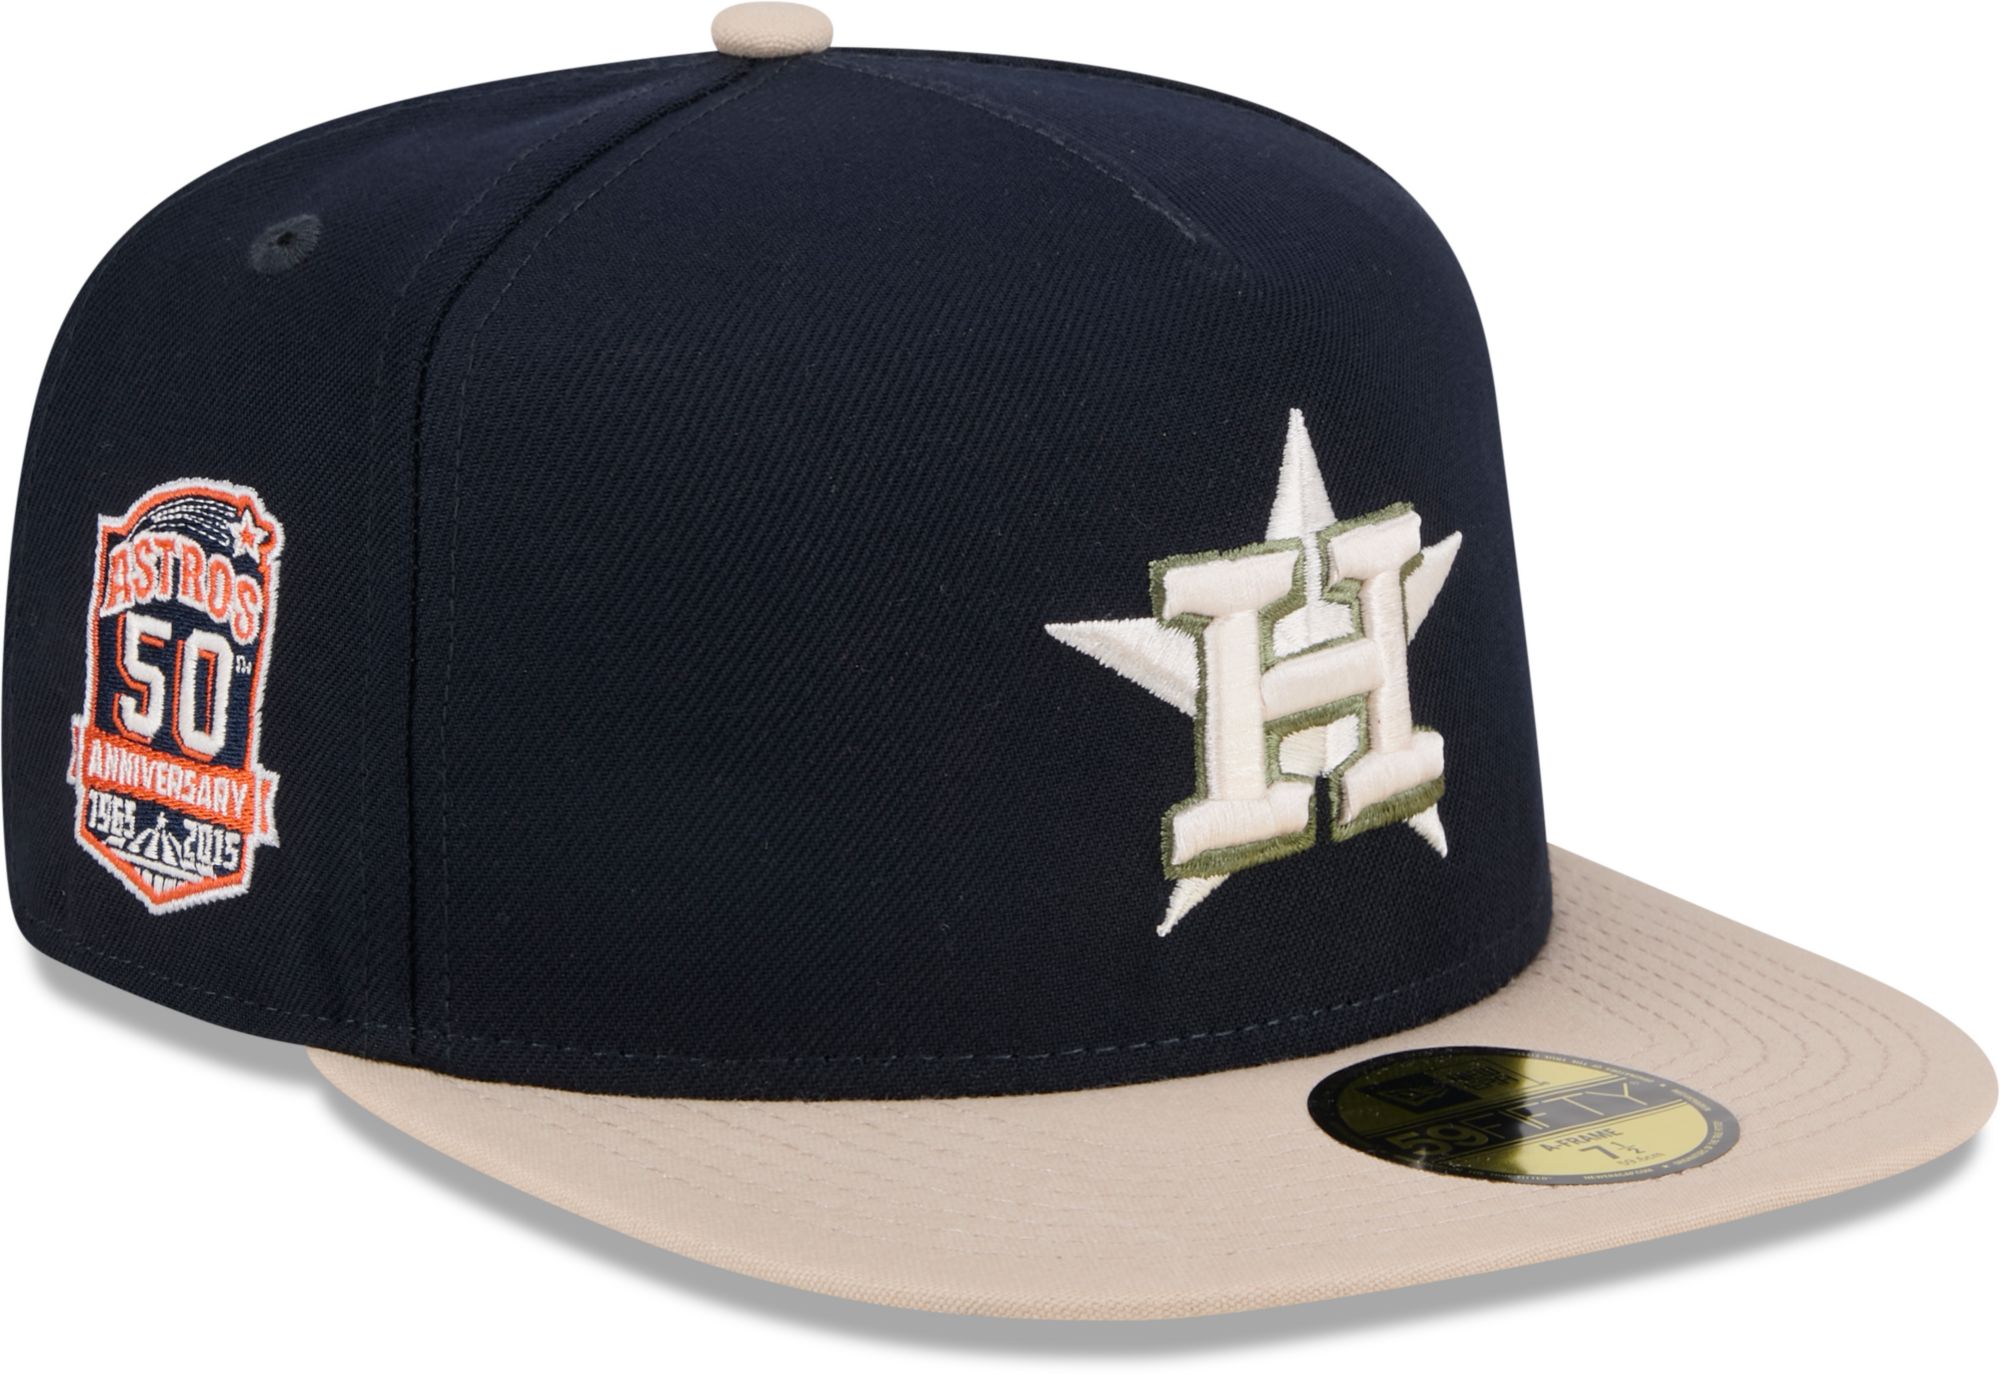 Astros Infield Garden Snapback White Hat